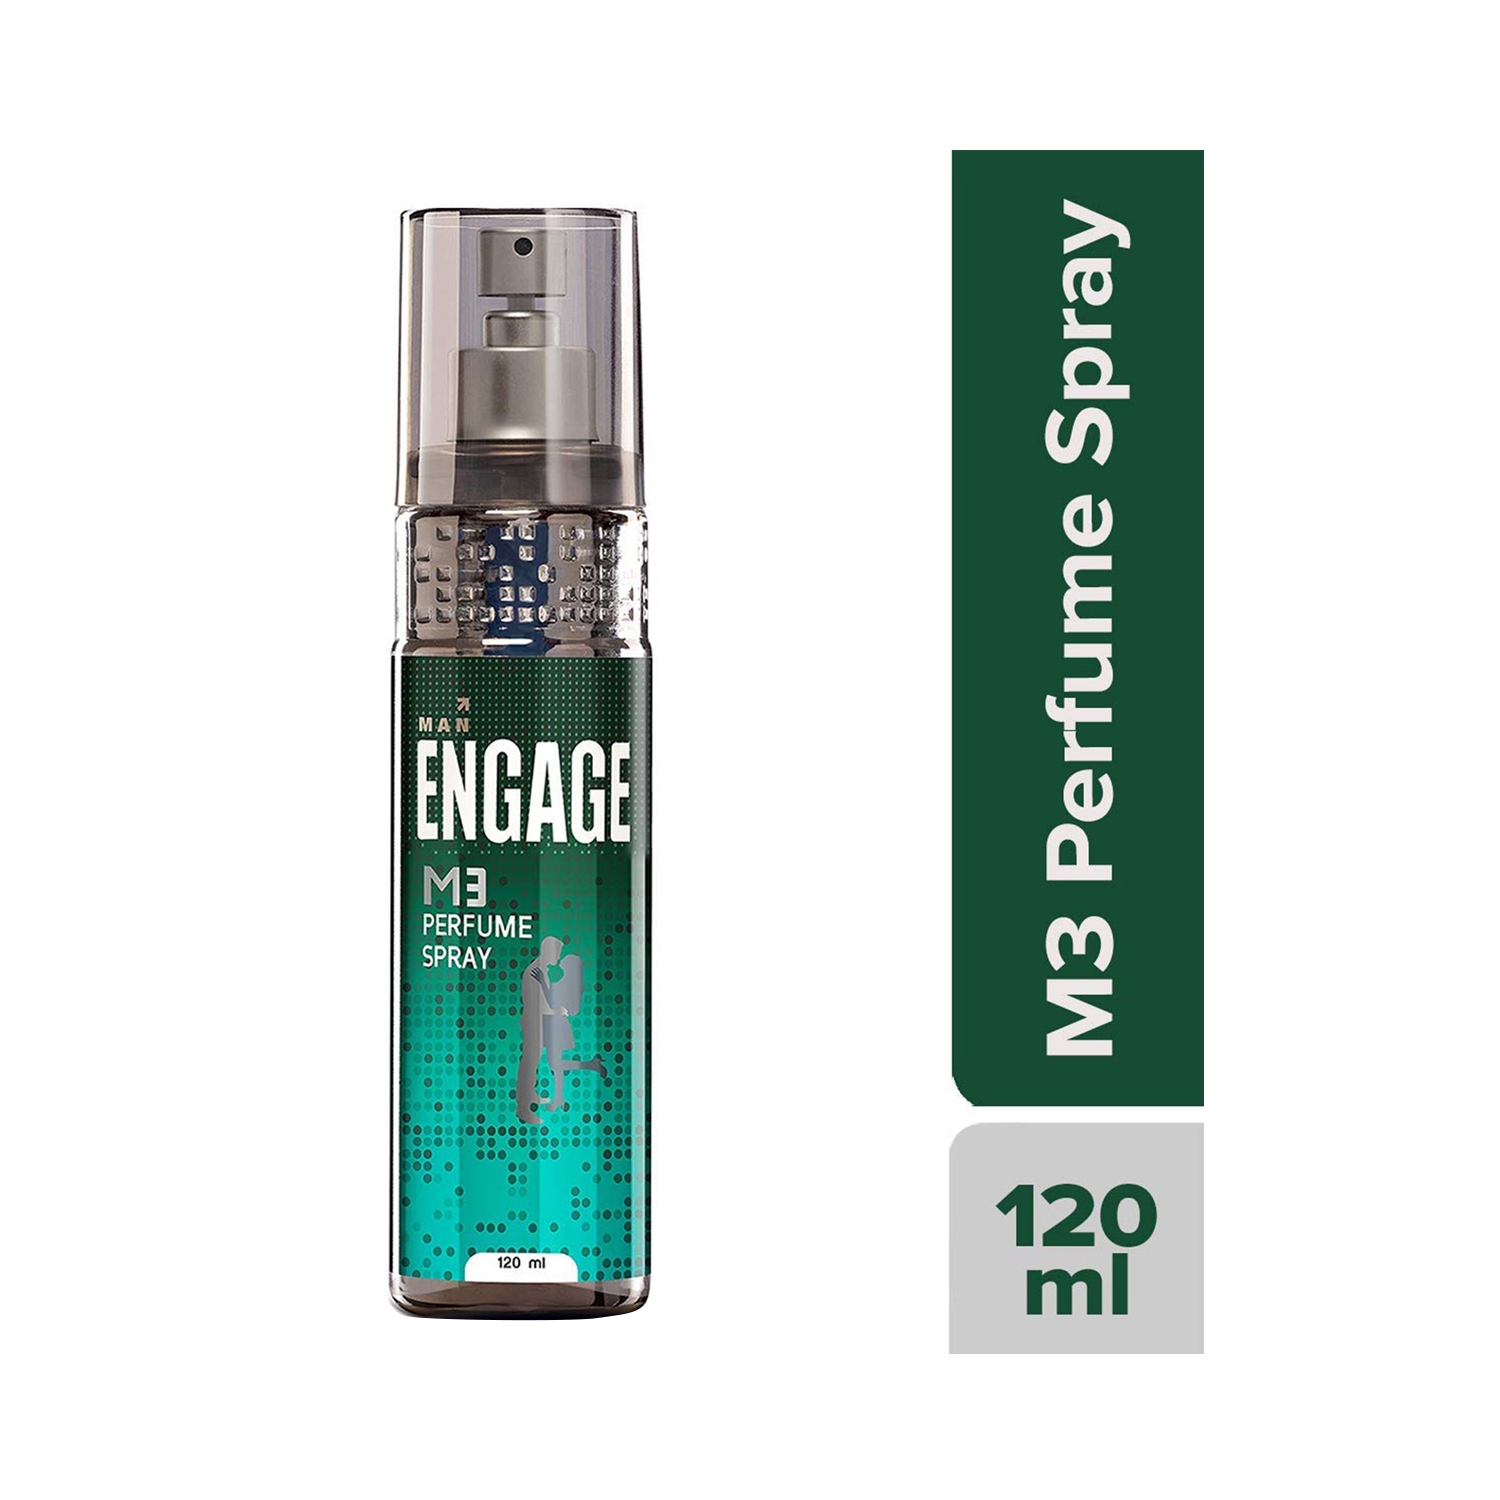 Engage M3 Perfume Spray For Man (120ml)